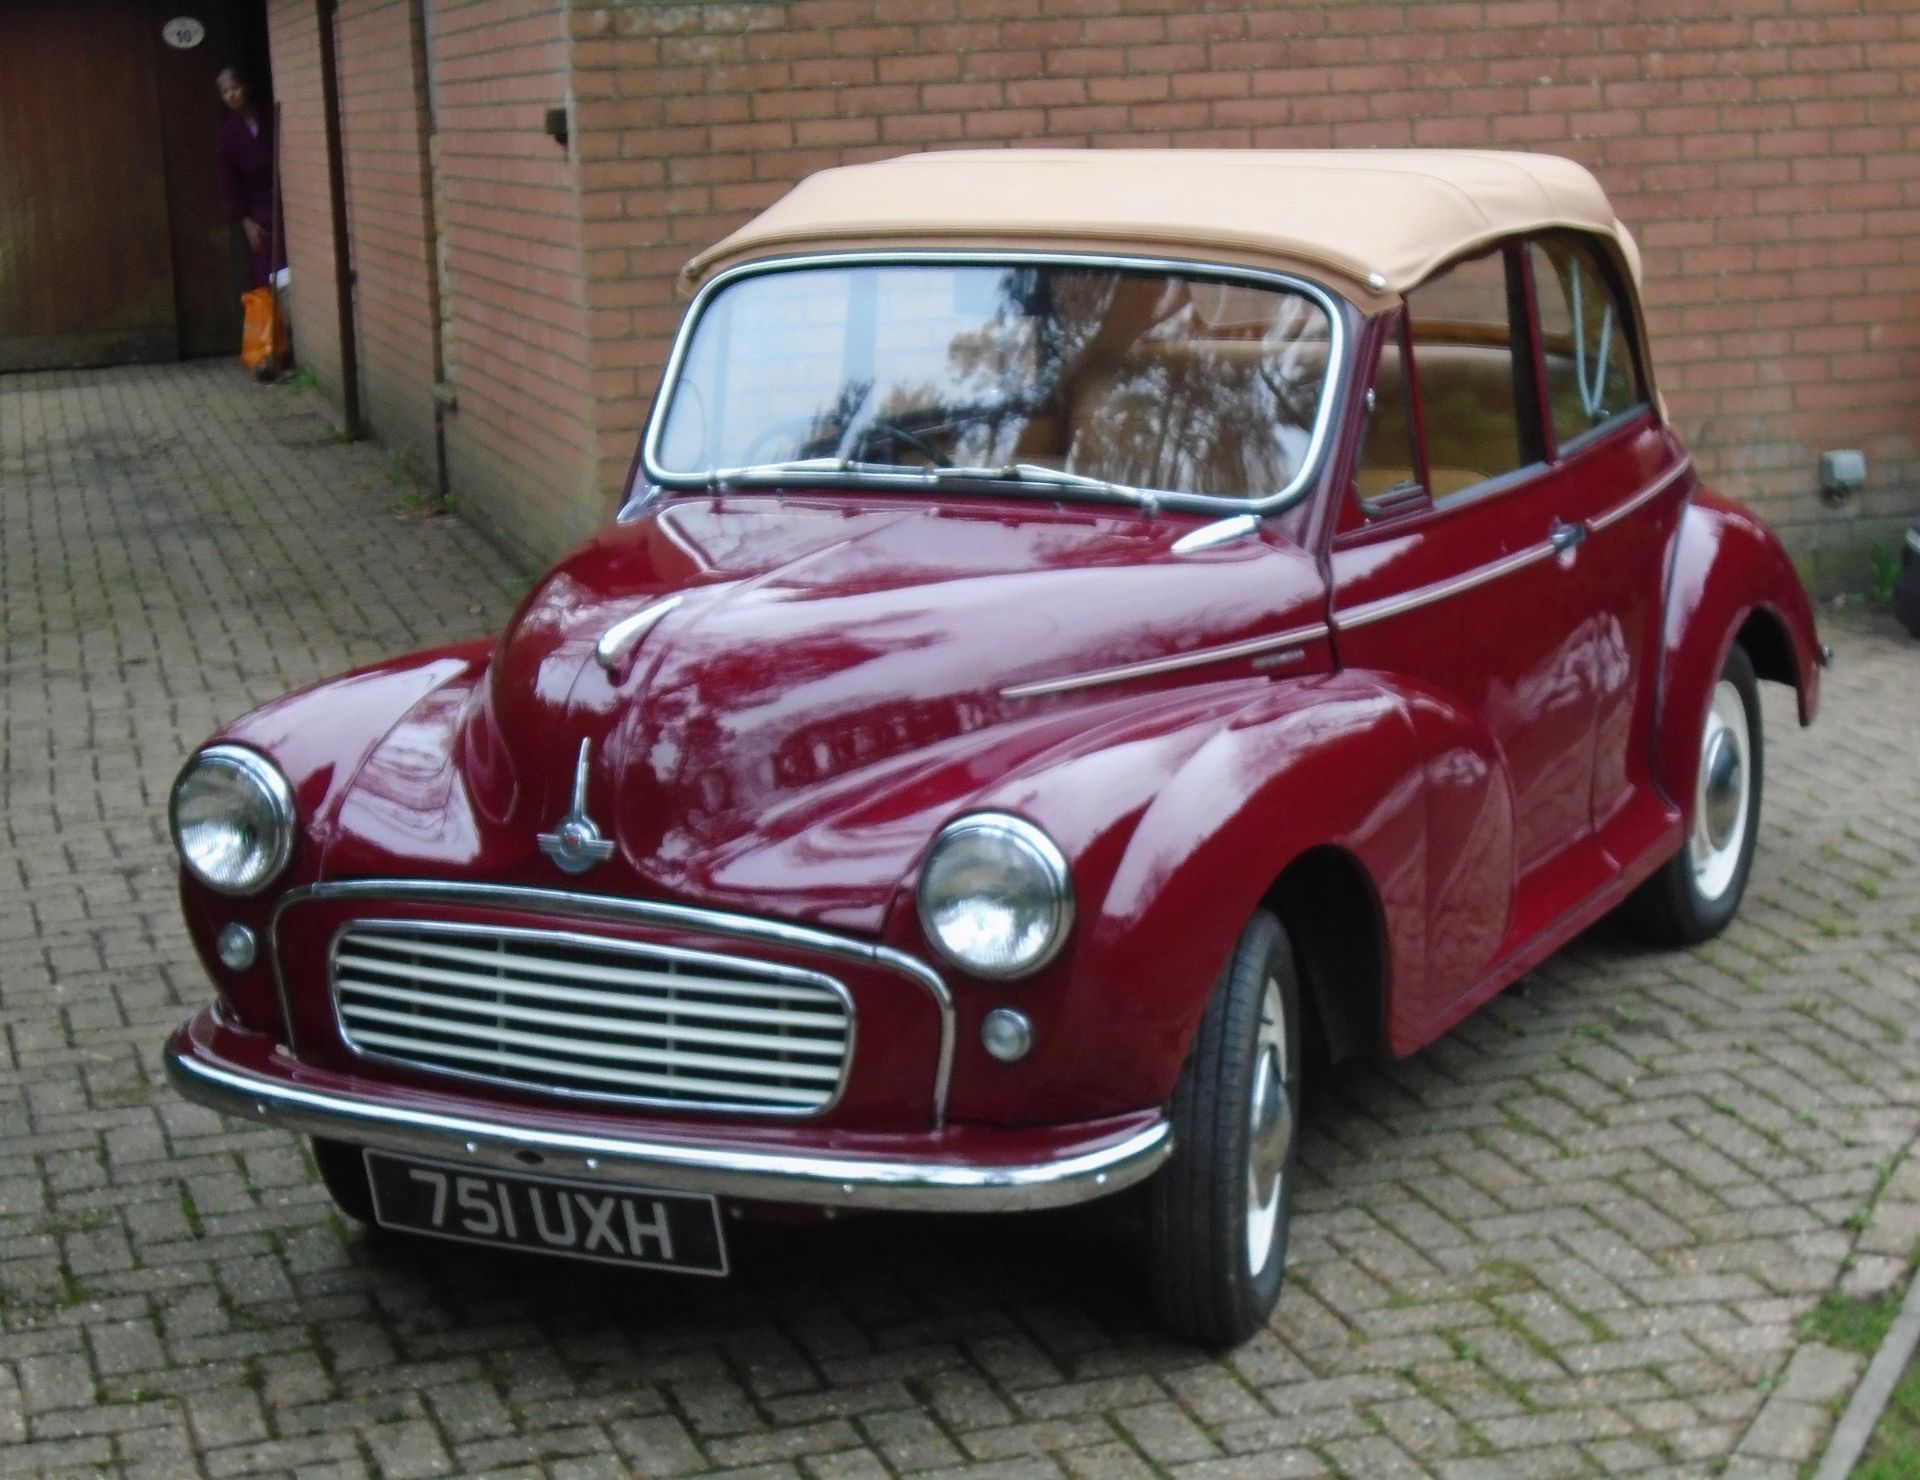 1963 MORRIS 1000 TOURER - Converted post-production Registration Number: 751 UXH Chassis Number: M/